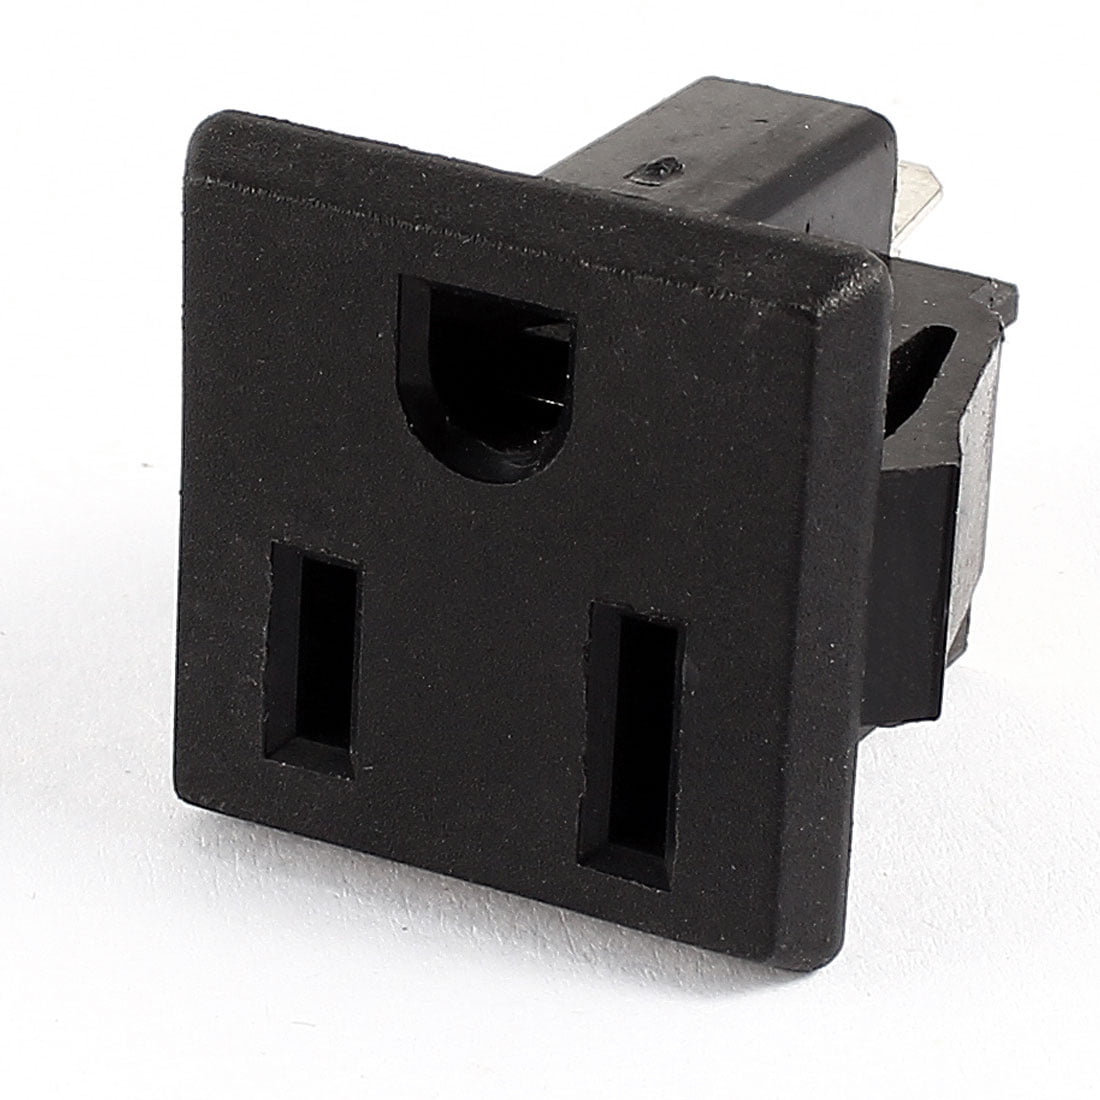 US 3 Pins Power Socket Outlet Plug Power Receptacle AC 125V 15A Black 1 pcs 